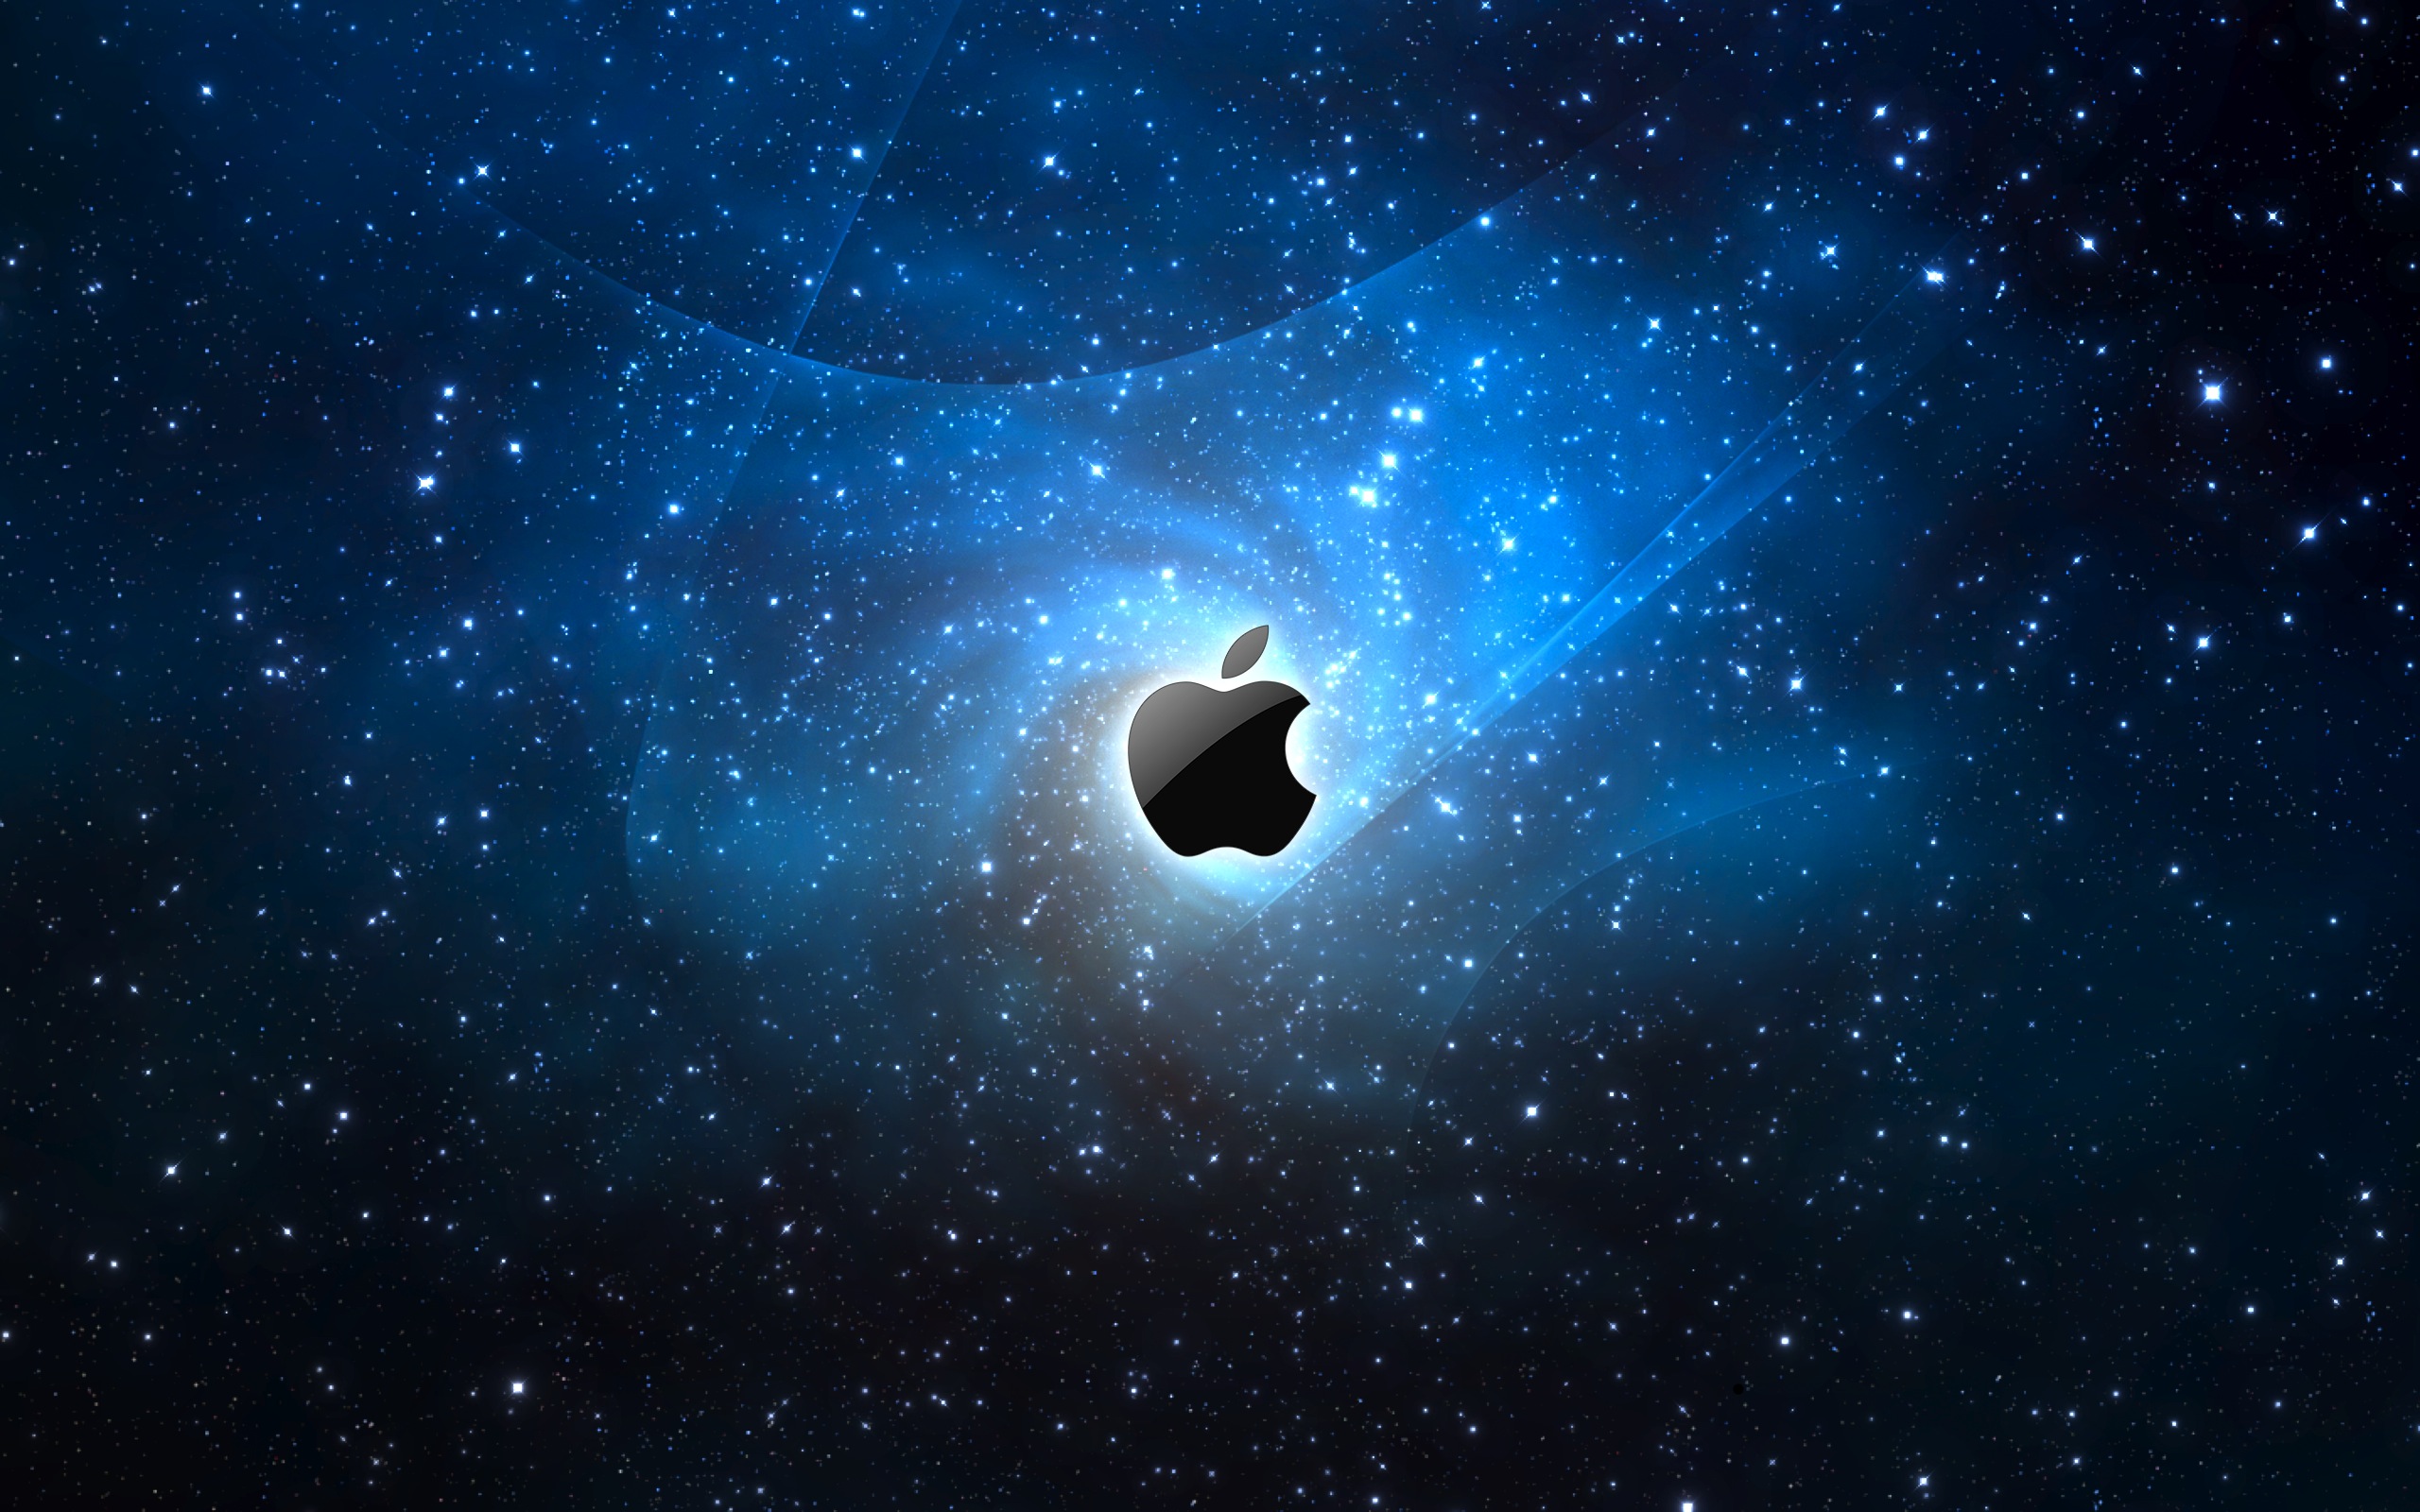 Space Apple logo wallpapers Space Apple logo stock photos